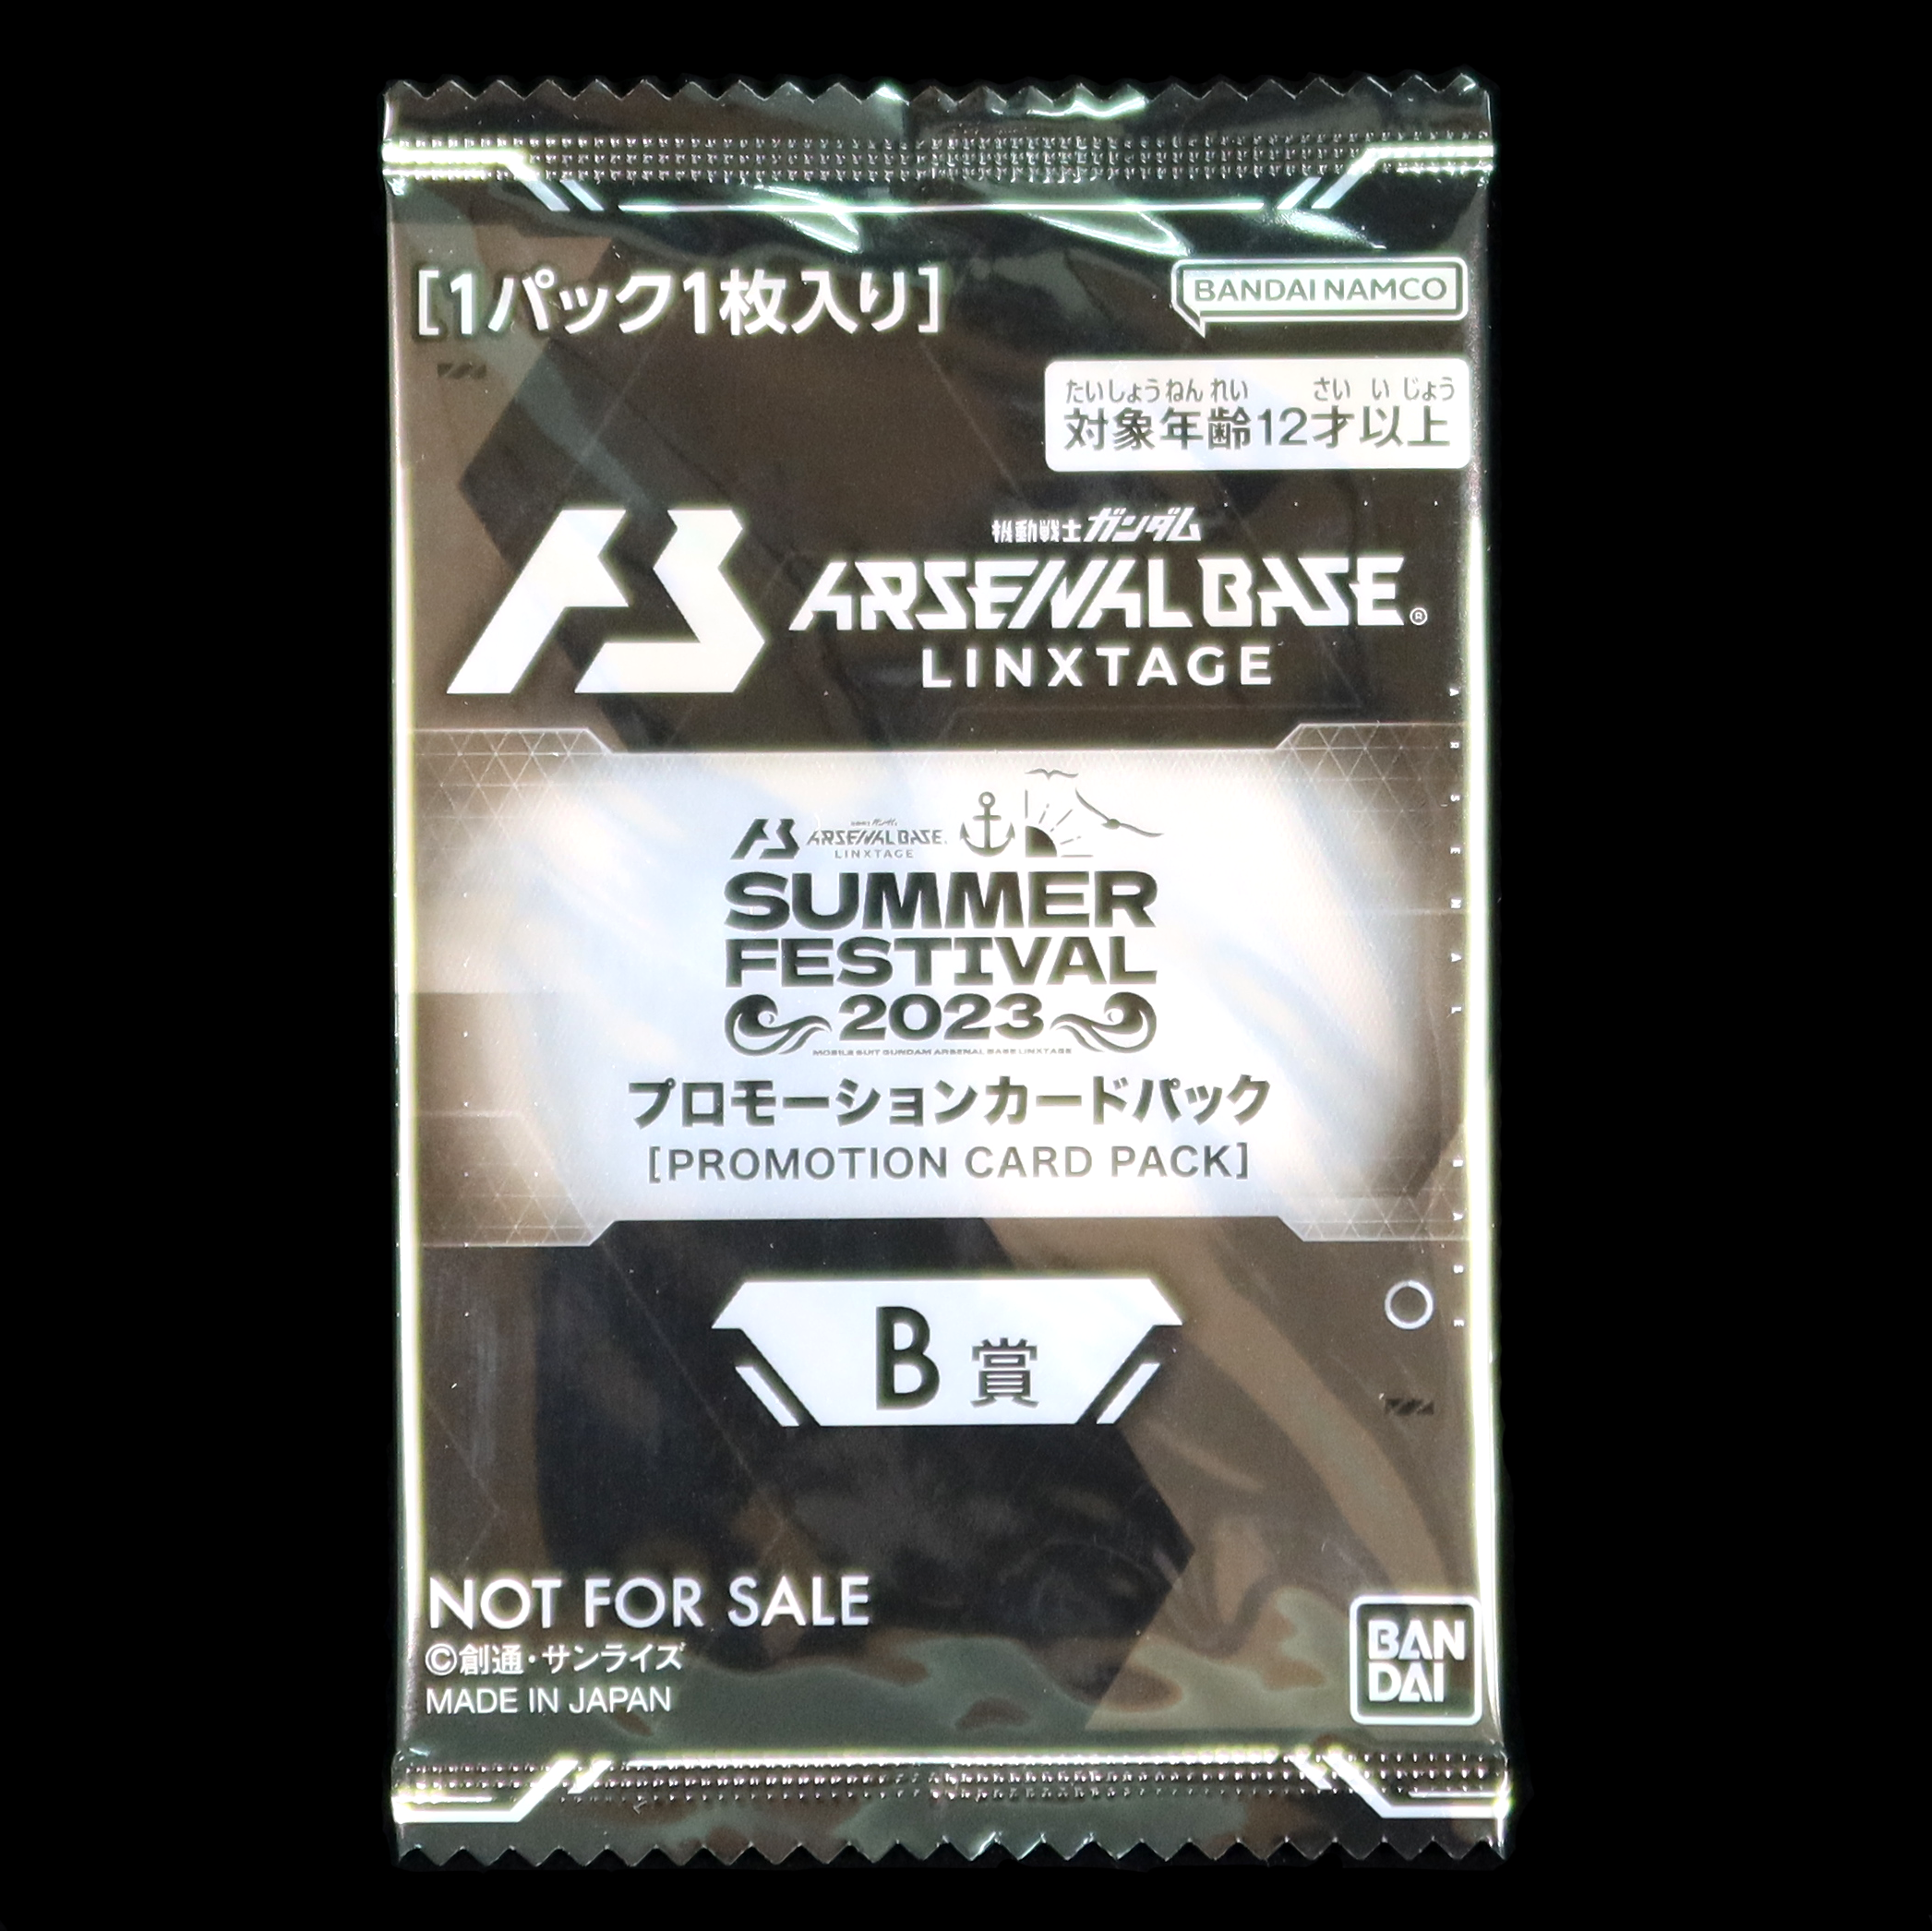 GUNDAM ARSENAL BASE Summer FESTIVAL 2023 B賞 [PROMOTION CARD PACK]